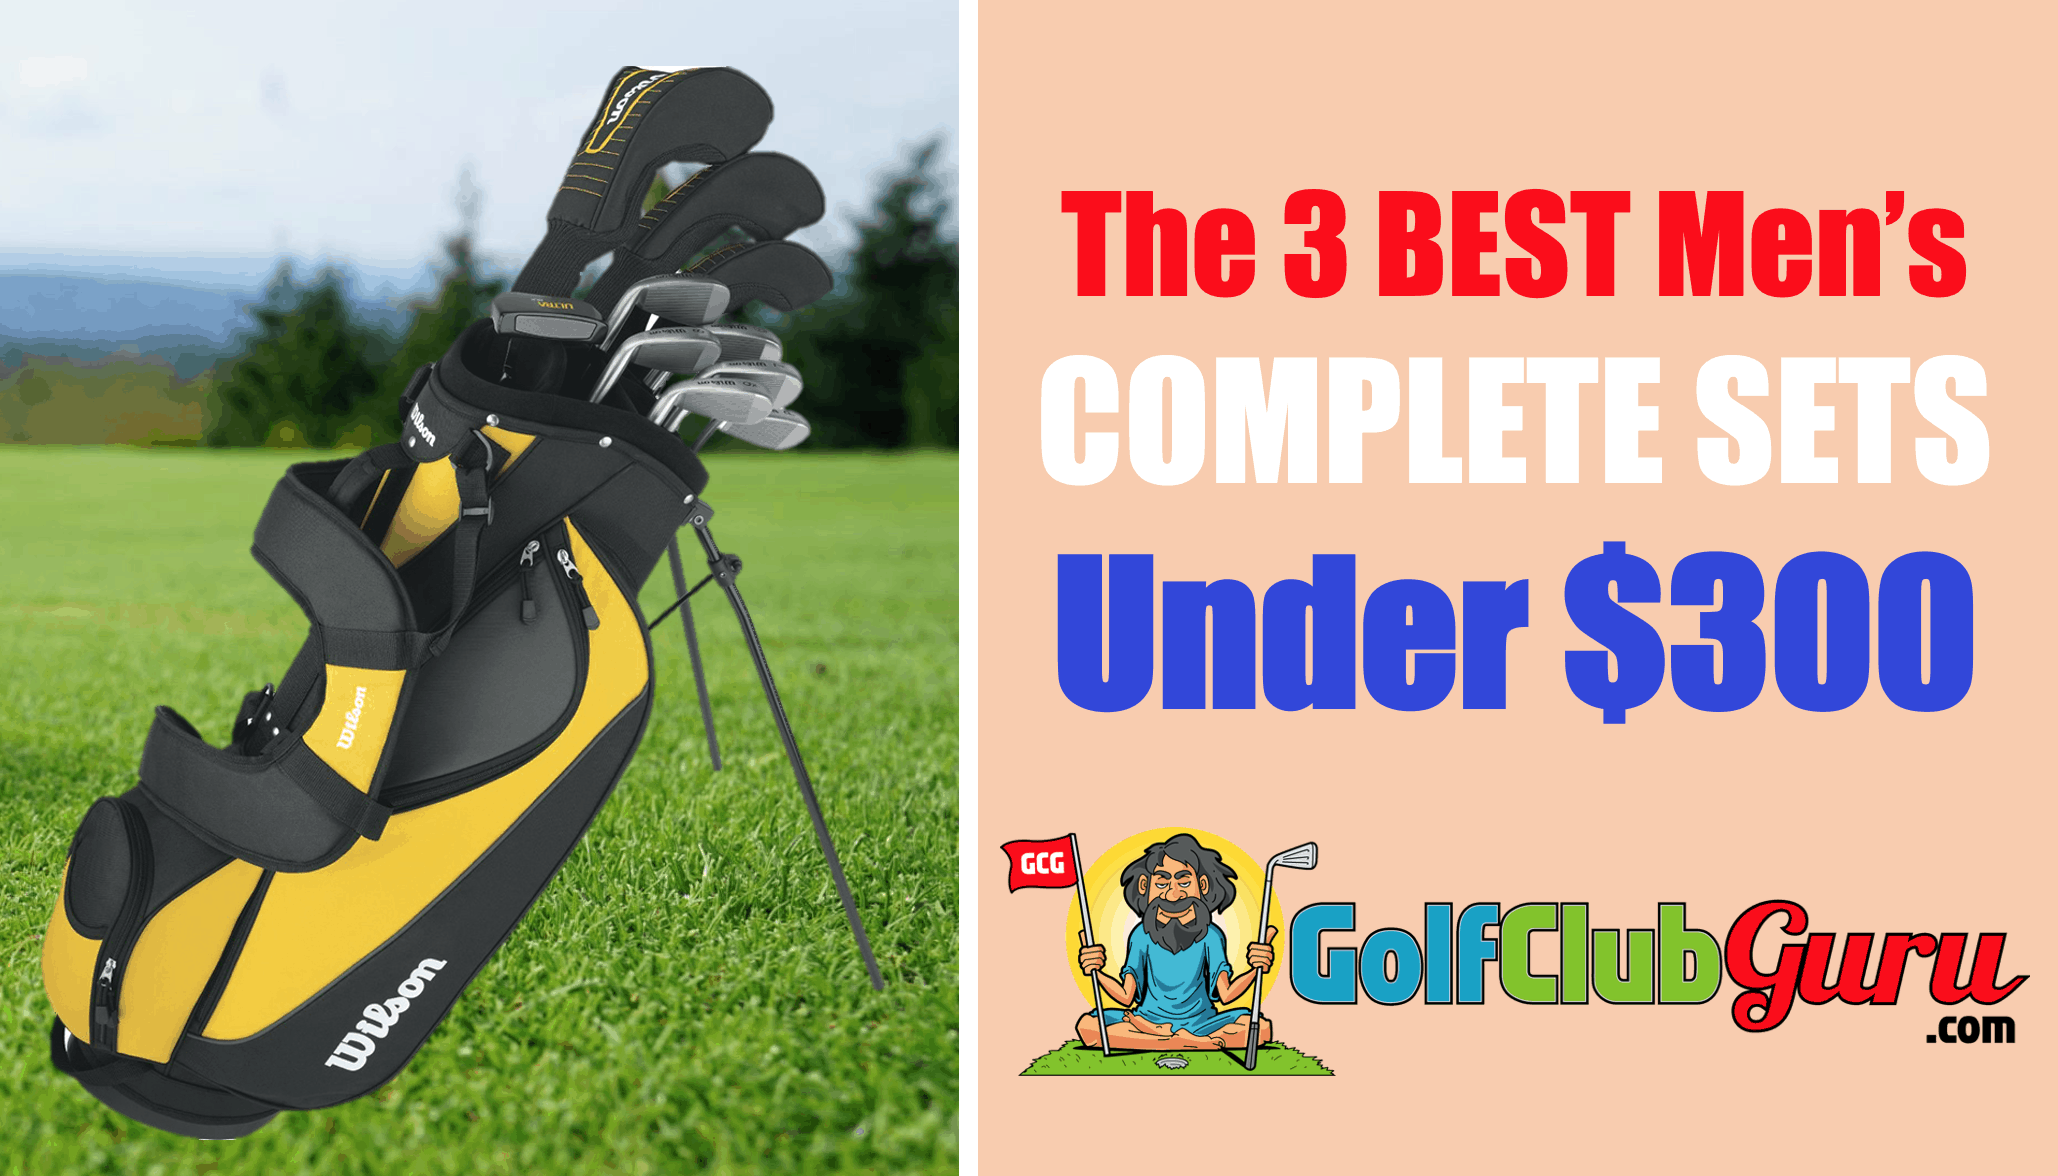 The 3 Best Complete Sets for Men Under $300 – Golf Club Guru